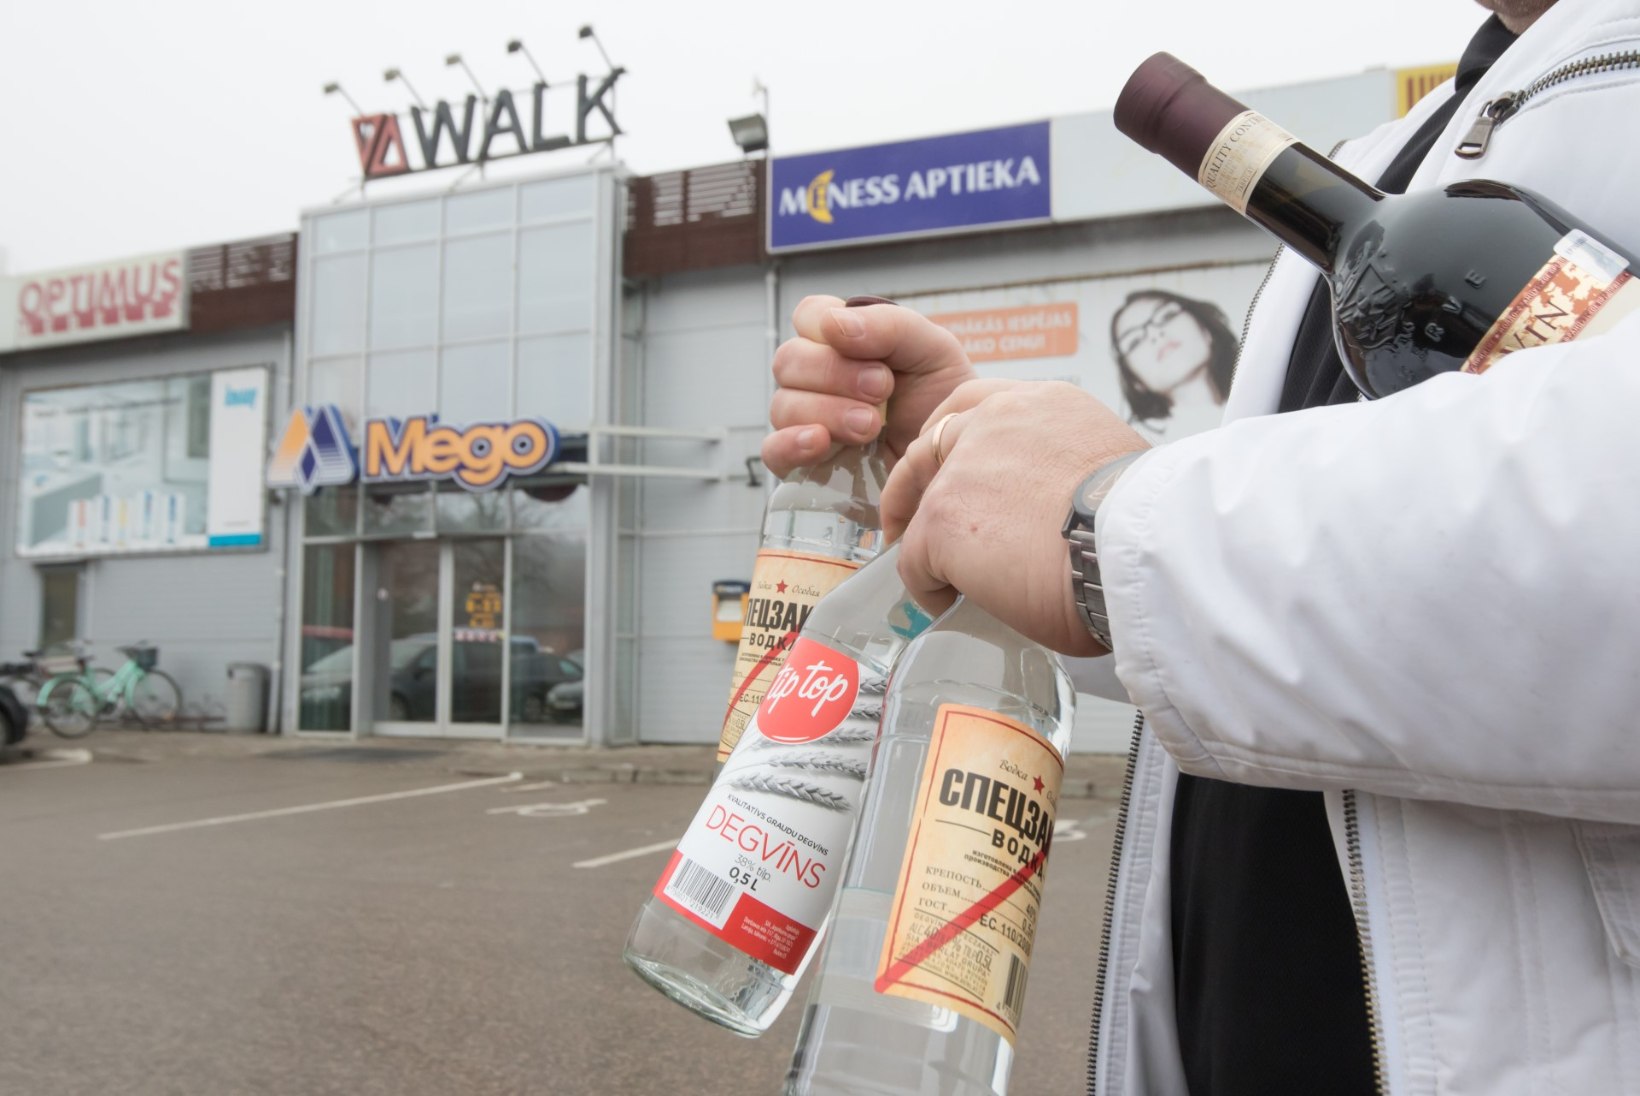 Eesti keskmise netopalga eest saaks kodumaal osta 365 liitrit õlut, aga Lätis  770 liitrit